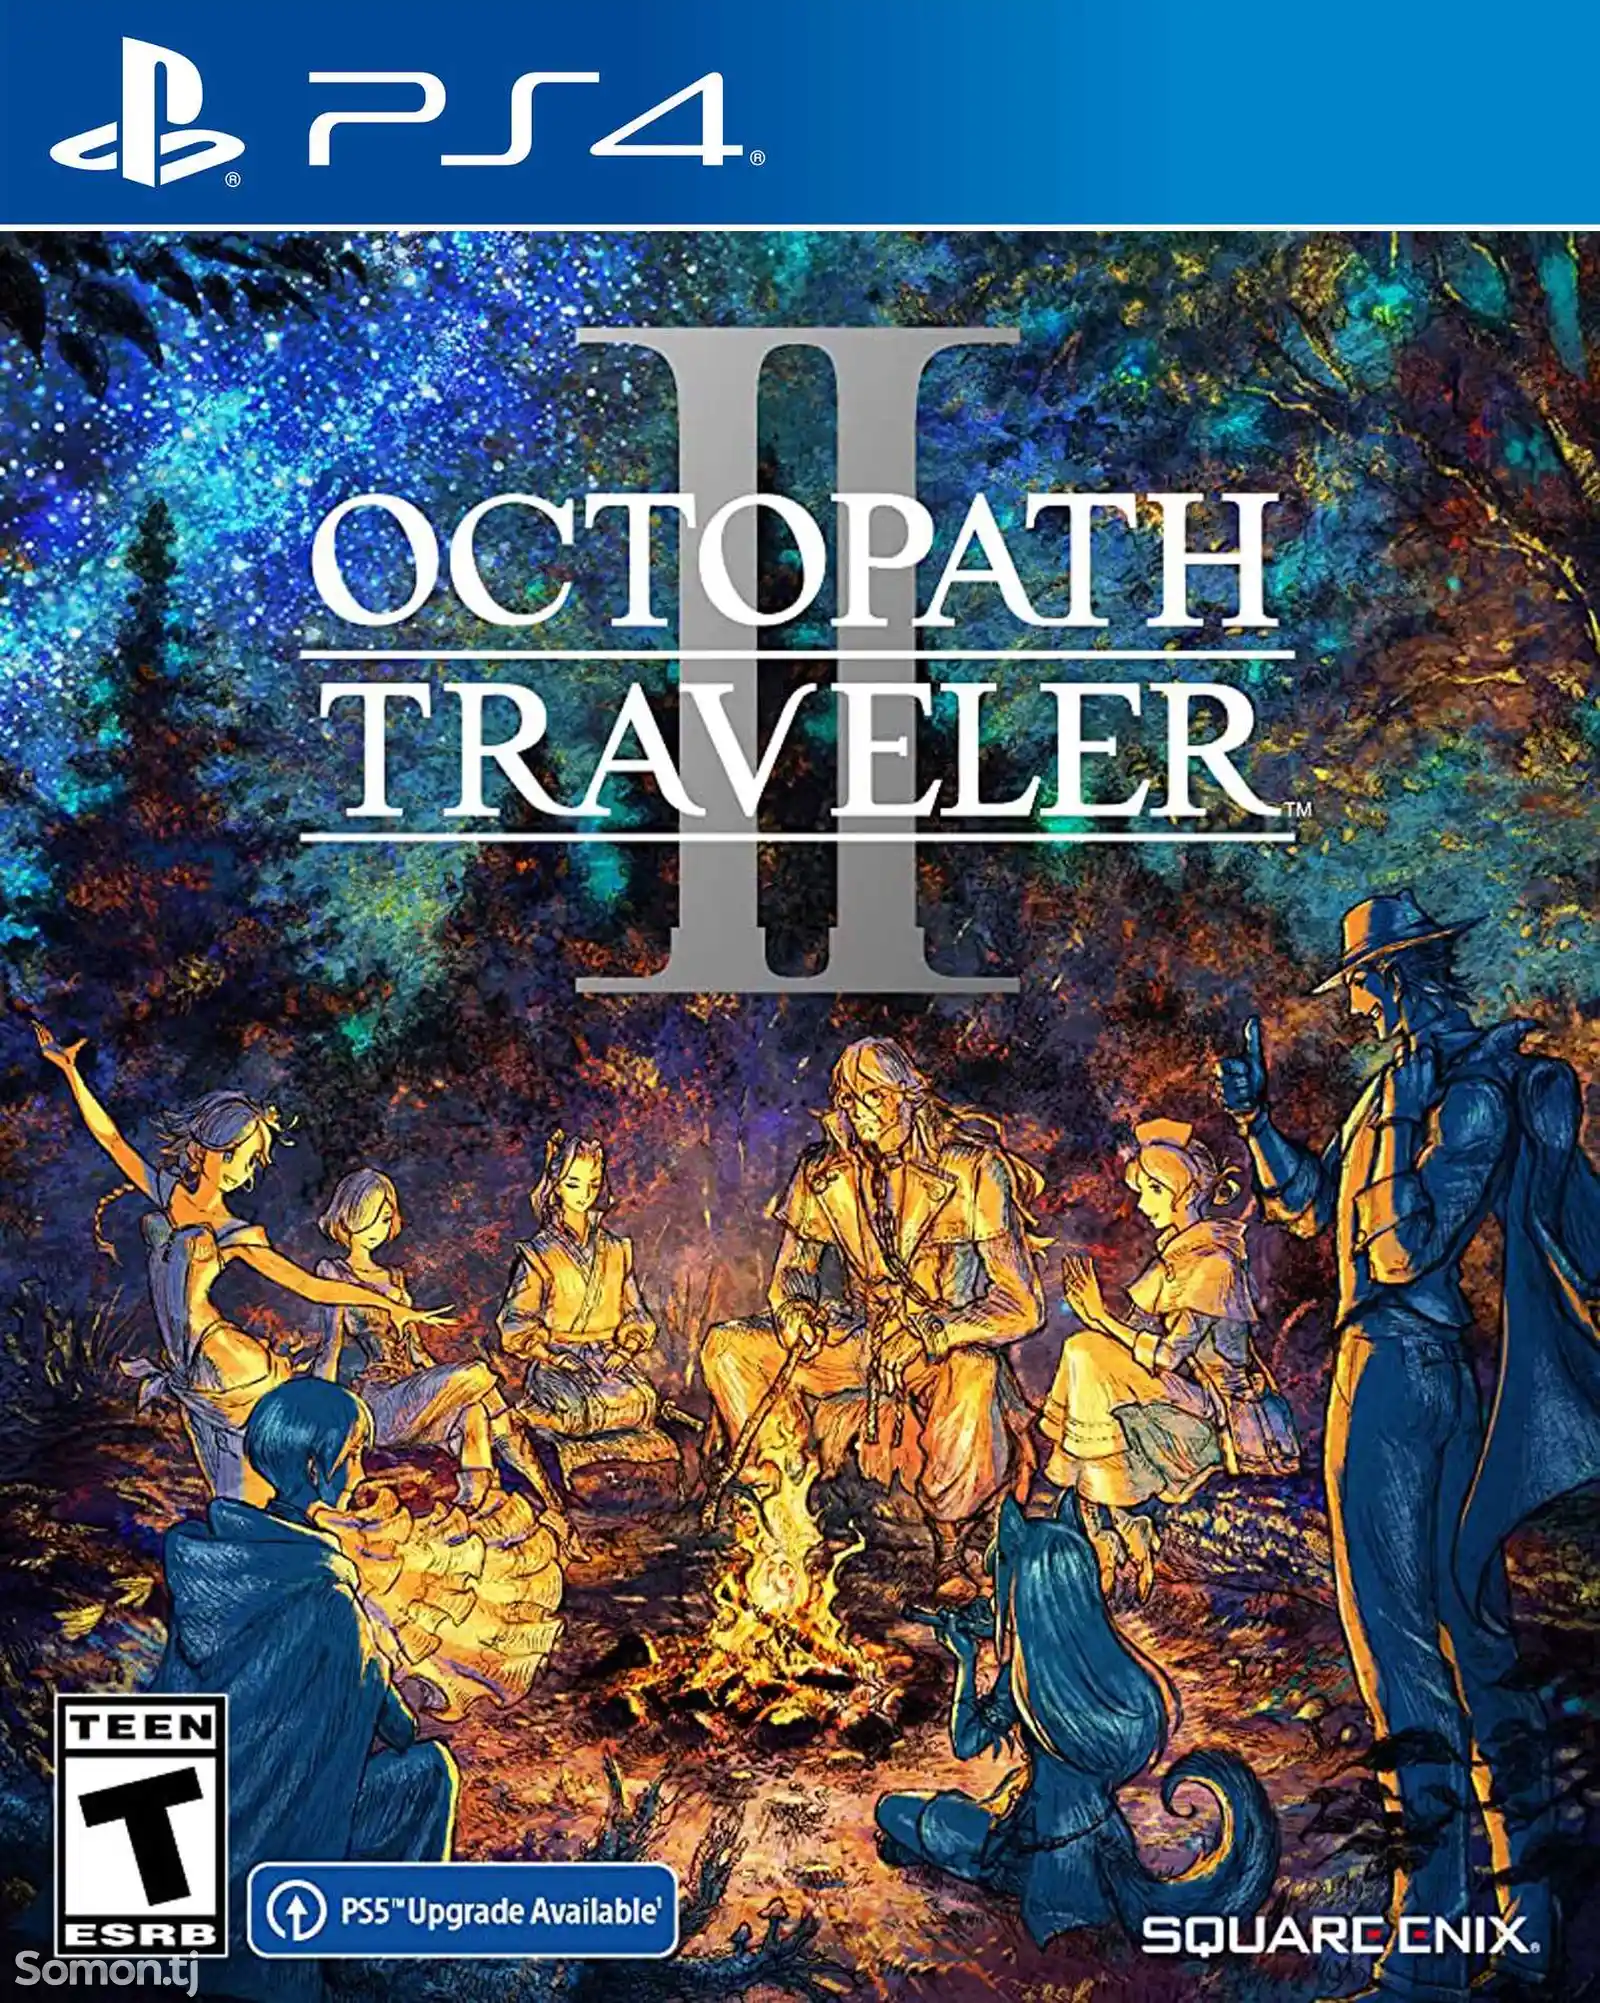 Игра Octopath traveler 2 для PS-4 / 5.05 / 6.72 / 7.02 / 7.55 / 9.00 /-1